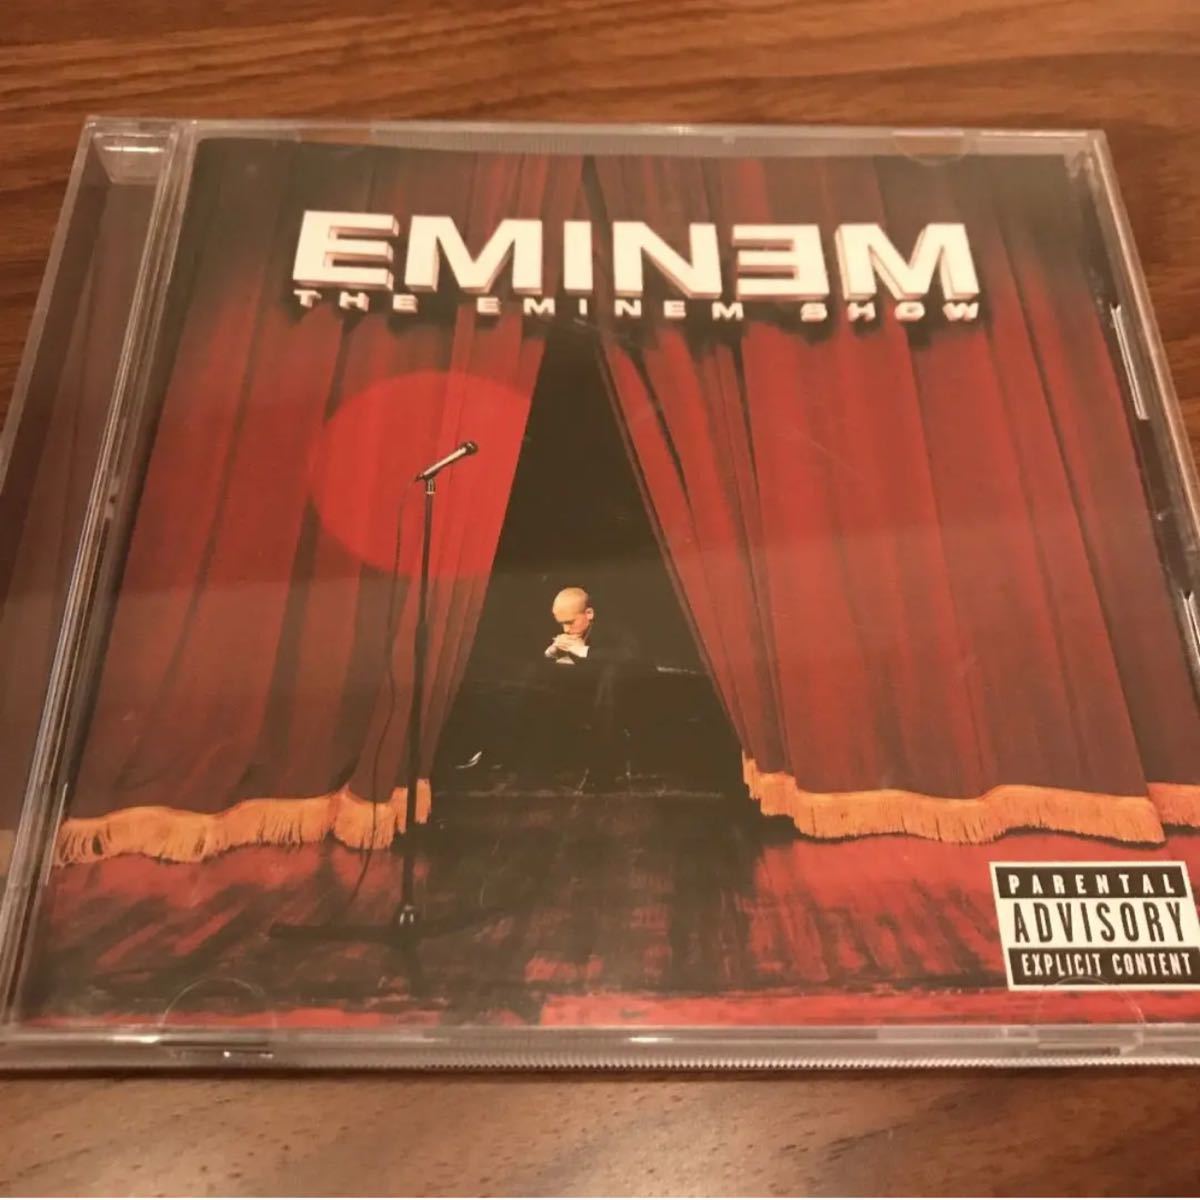 『The Eminem Show』 / EMINEM